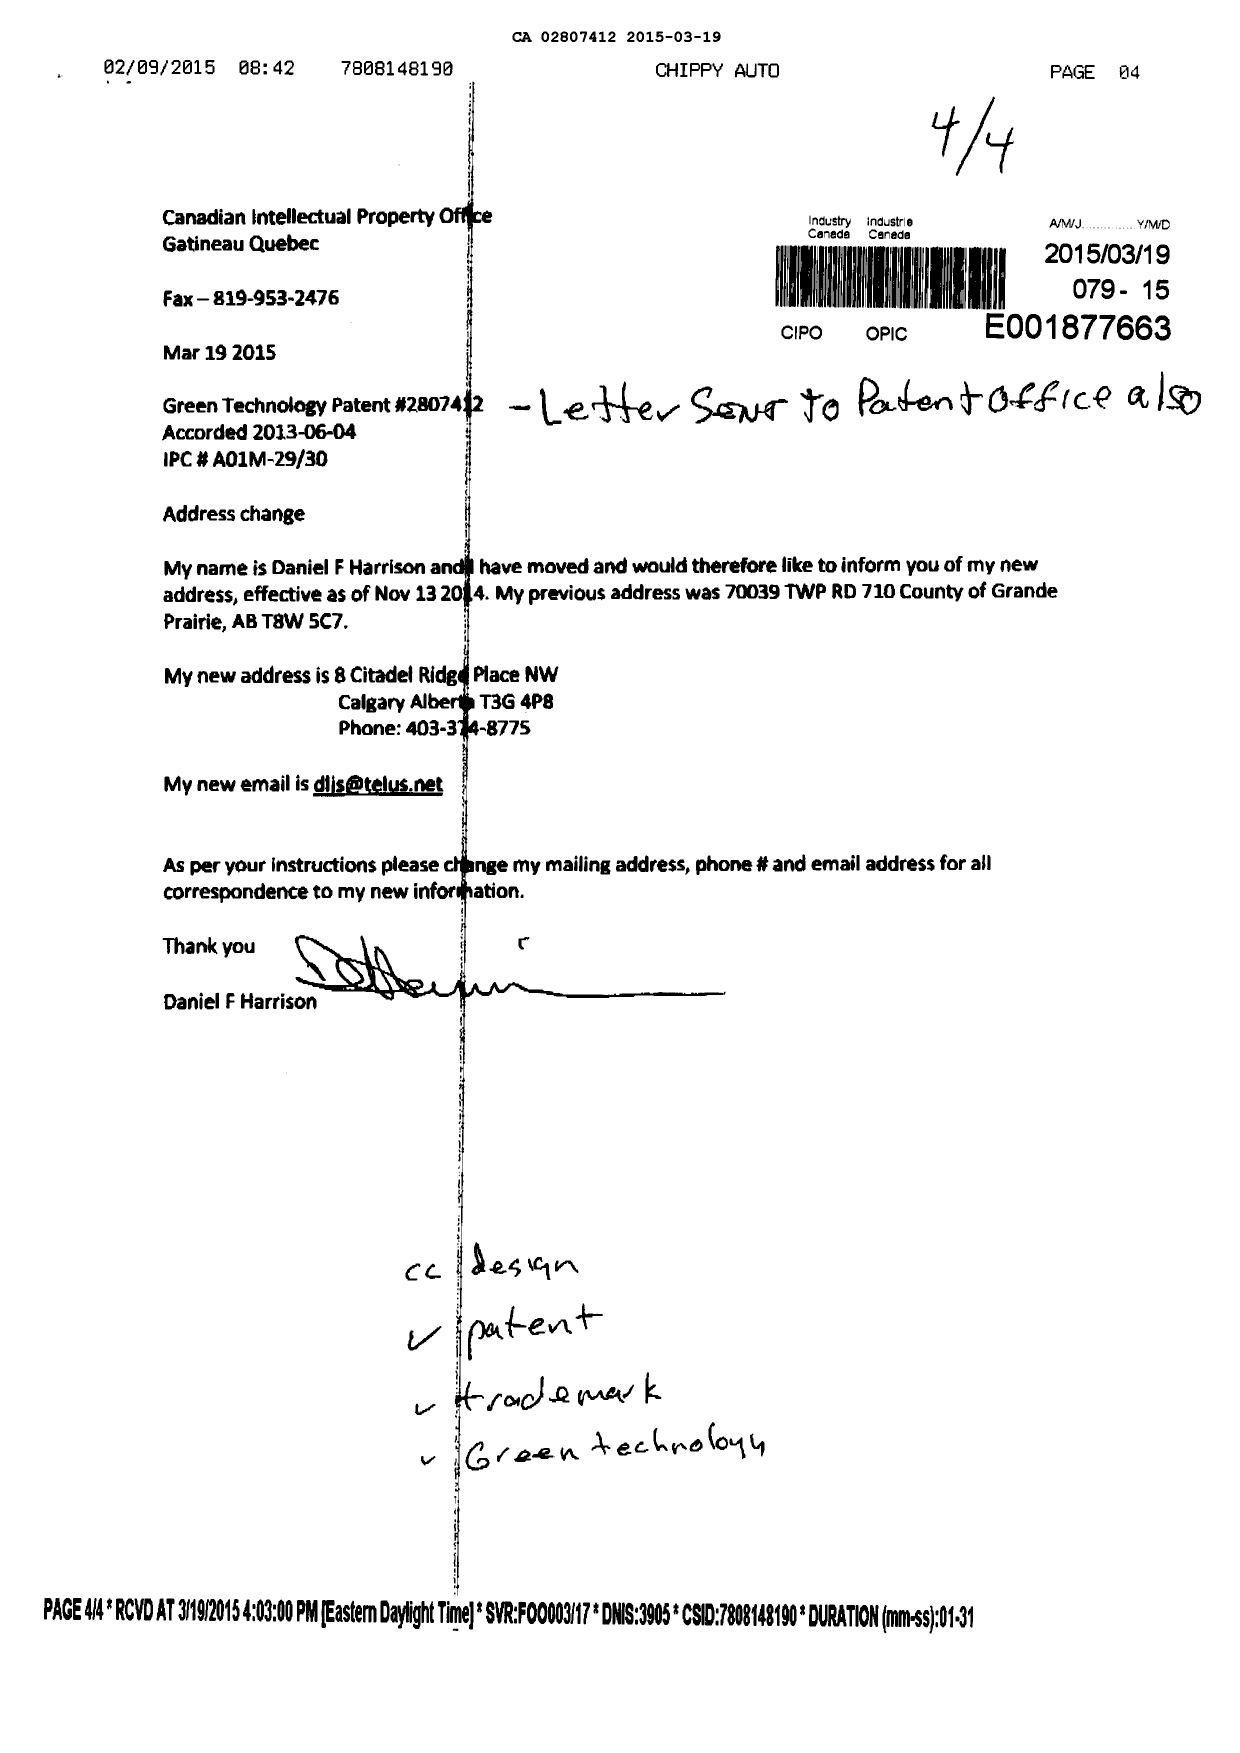 Canadian Patent Document 2807412. Correspondence 20150319. Image 2 of 2